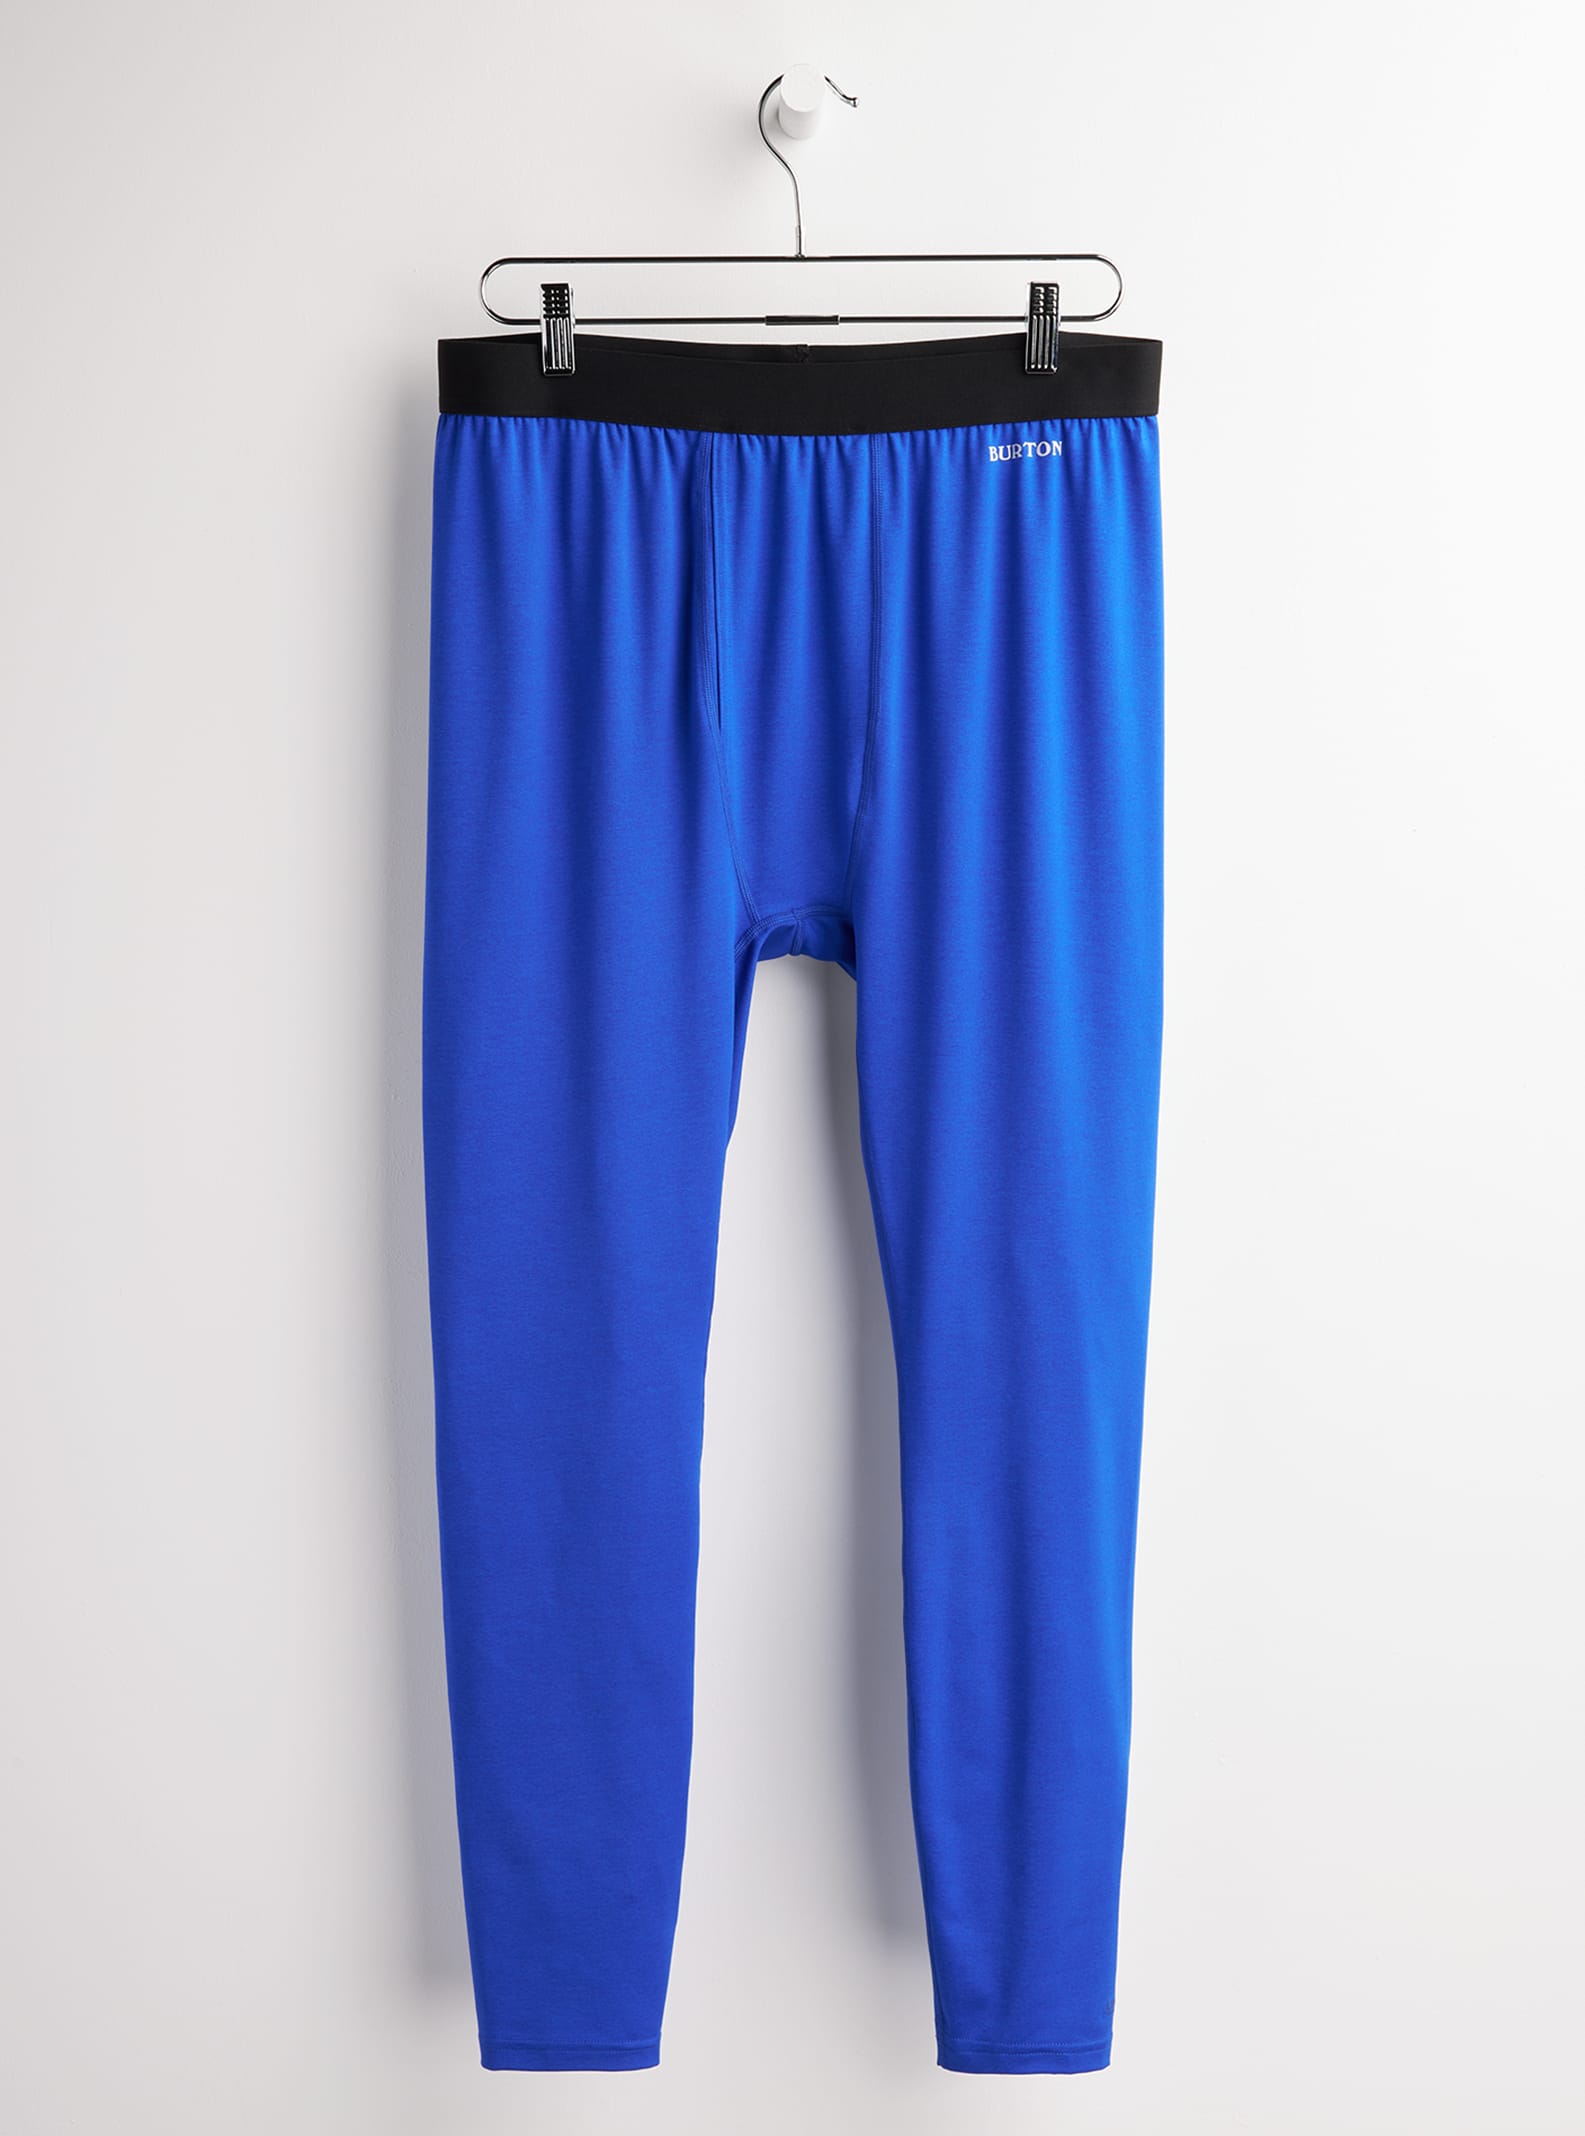 Burton - Pantalon sous-vêtement Lightweight X homme, XS